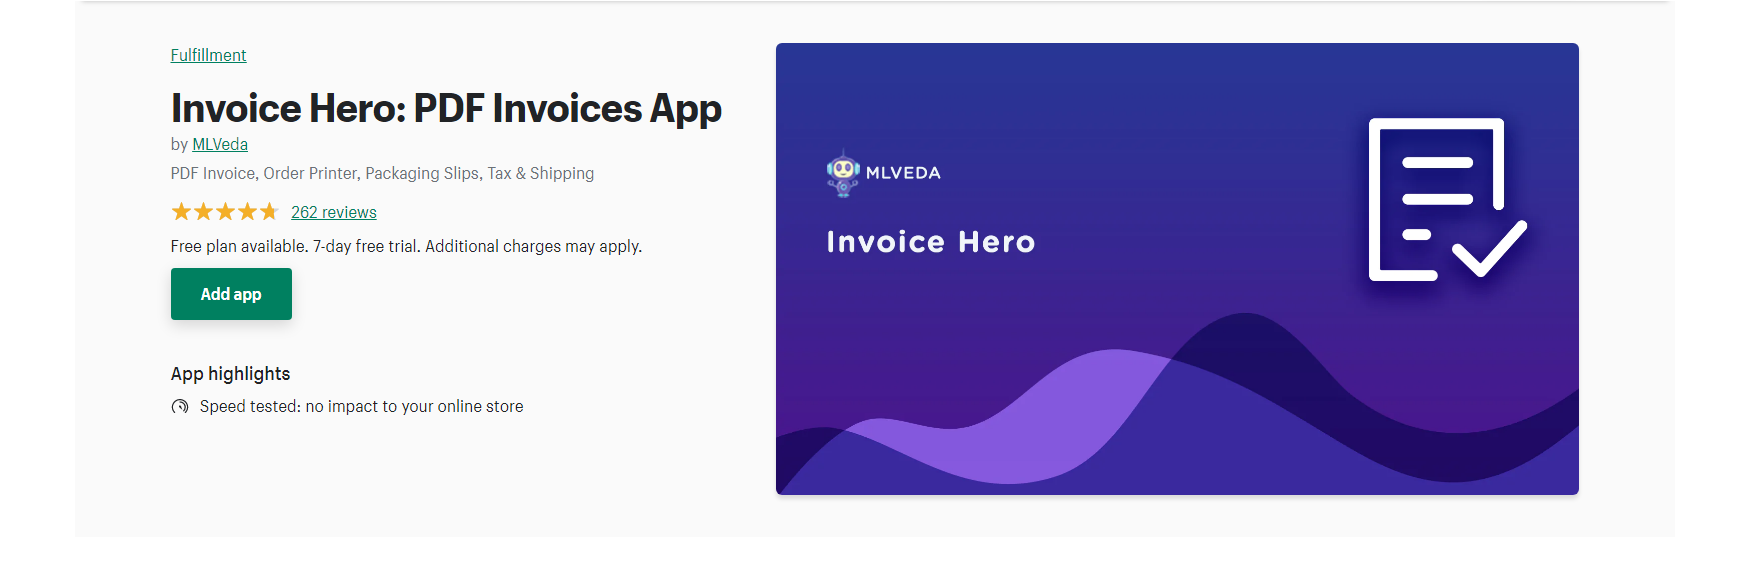 Invoice Hero - shopify invoice app